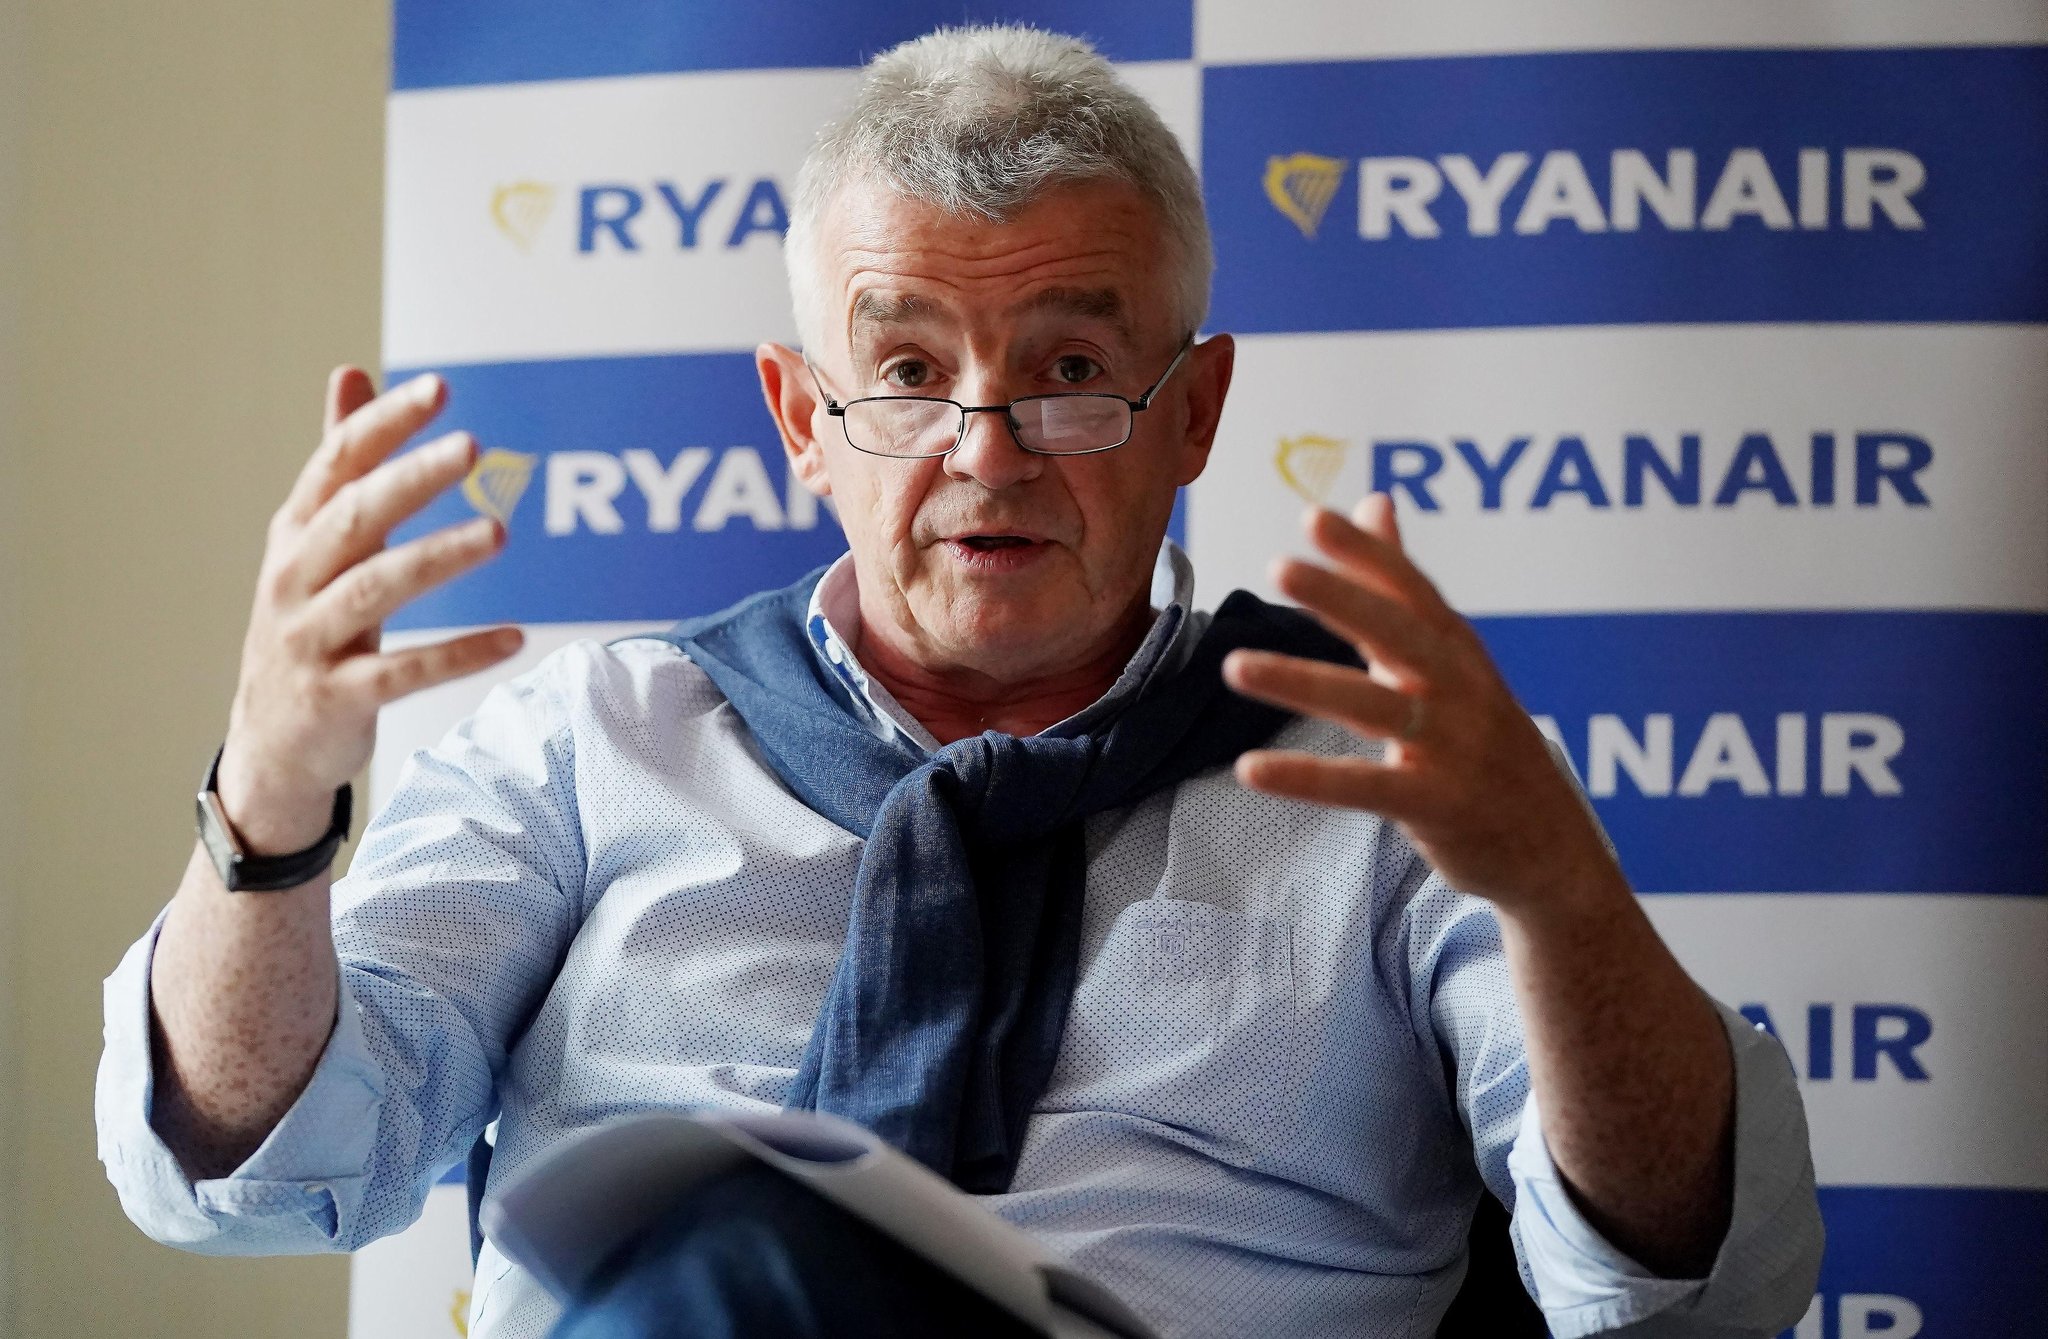 Ryanair boss warns of summer flight price rises